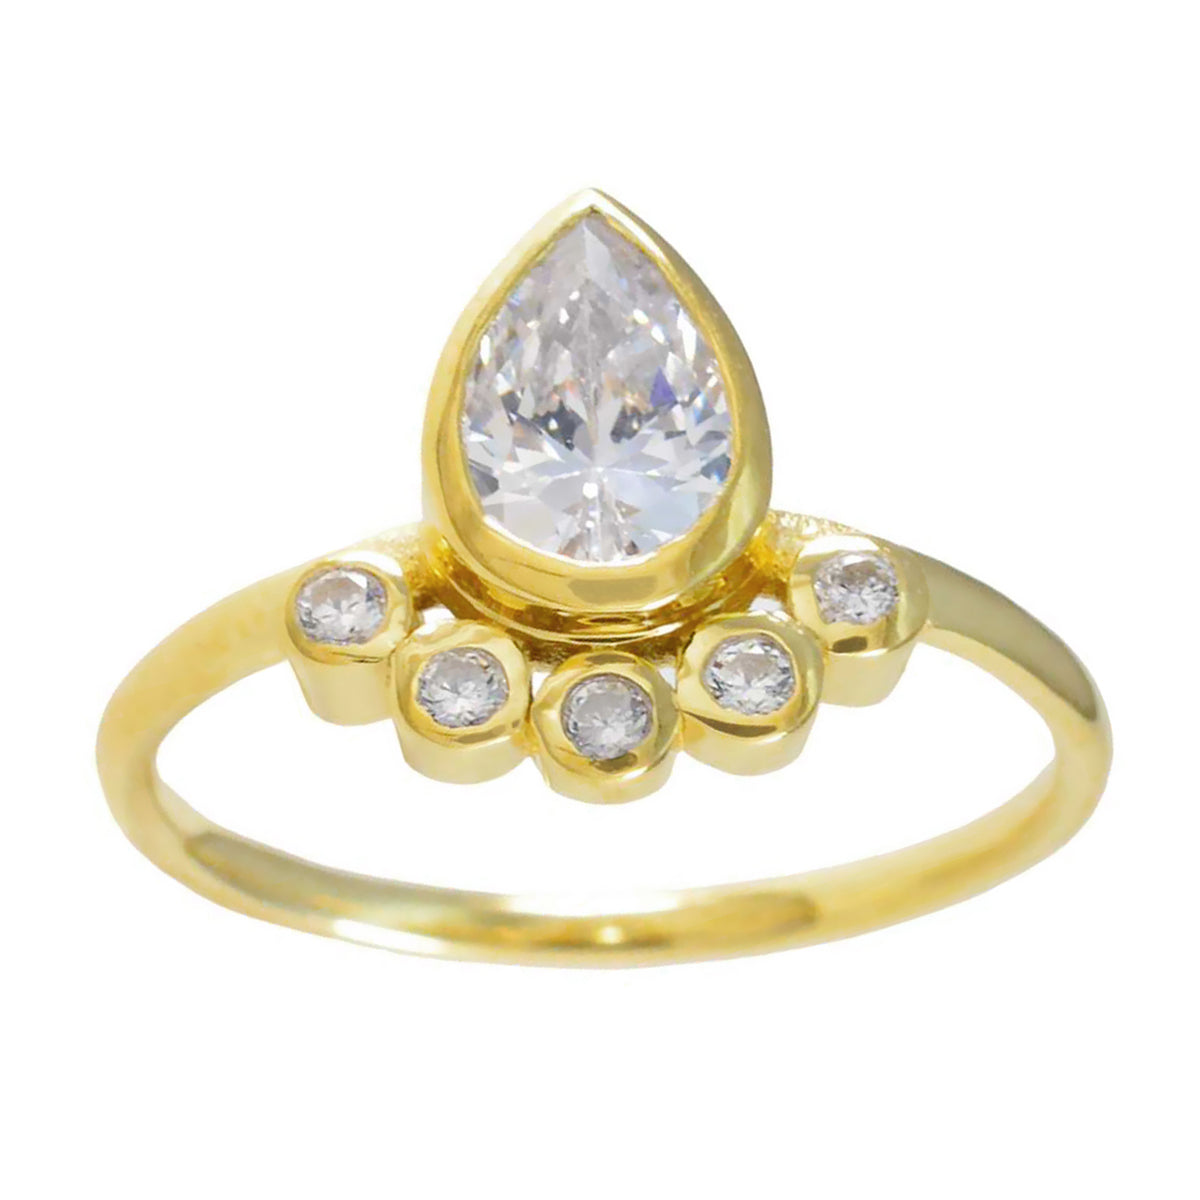 Riyo Jaipur zilveren ring met geelgouden witte CZ-steen peervormige ringring